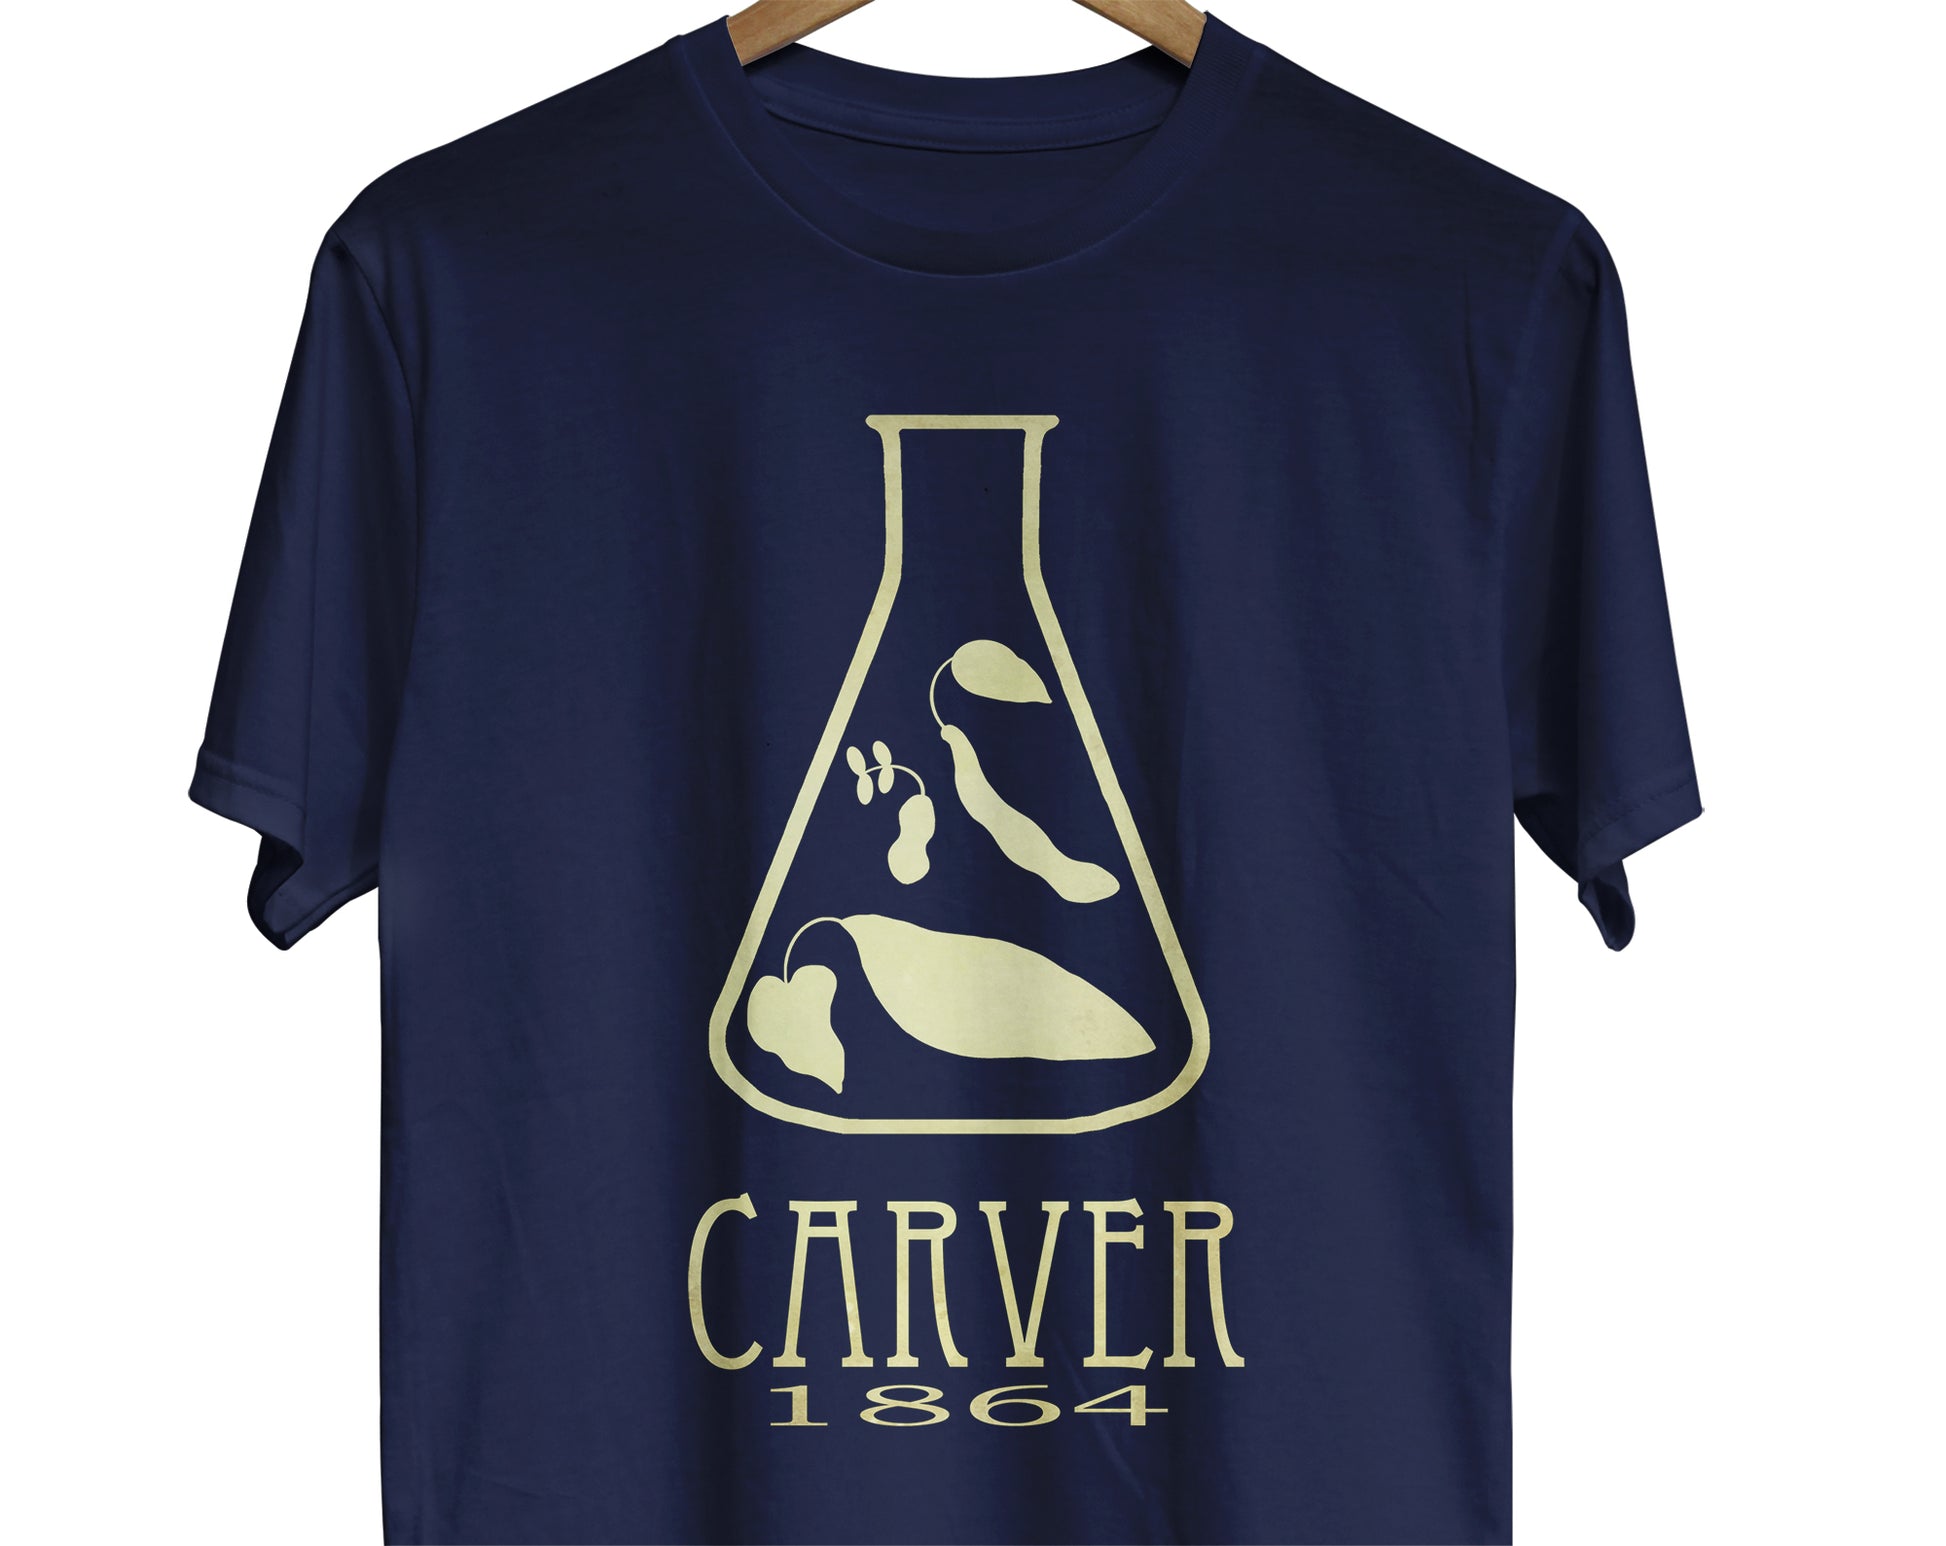 George Washington Carver chemistry t-shirt for science teacher